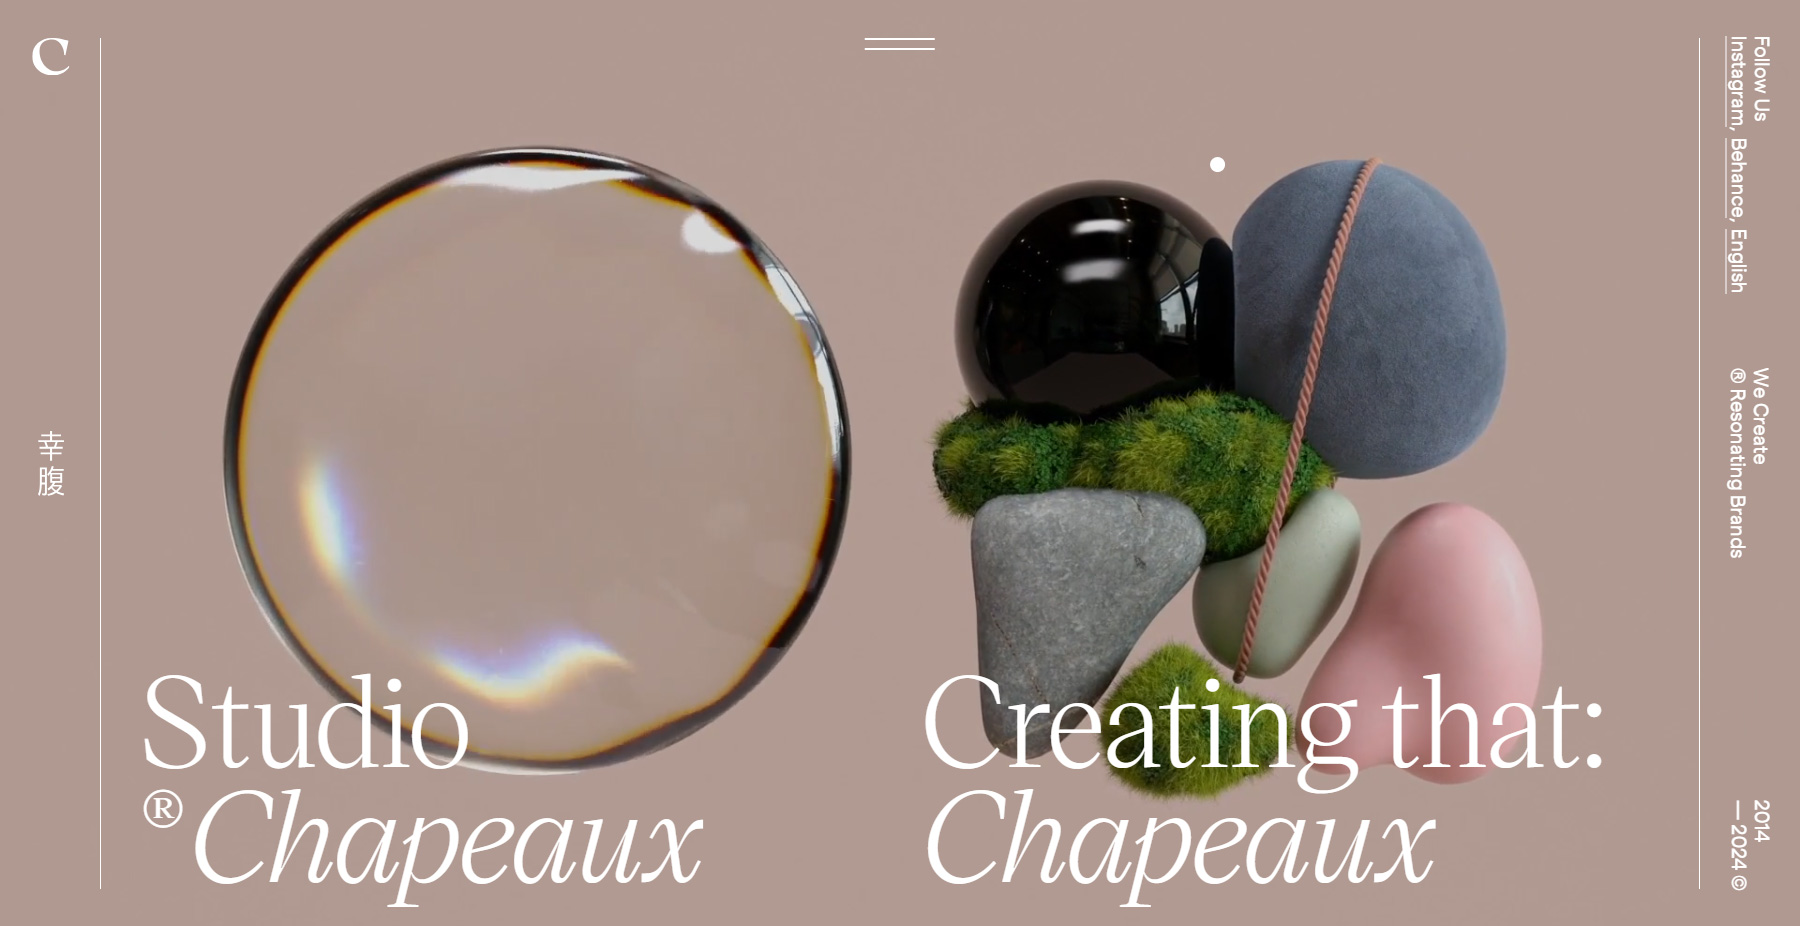 Studio Chapeaux - Website of the Day